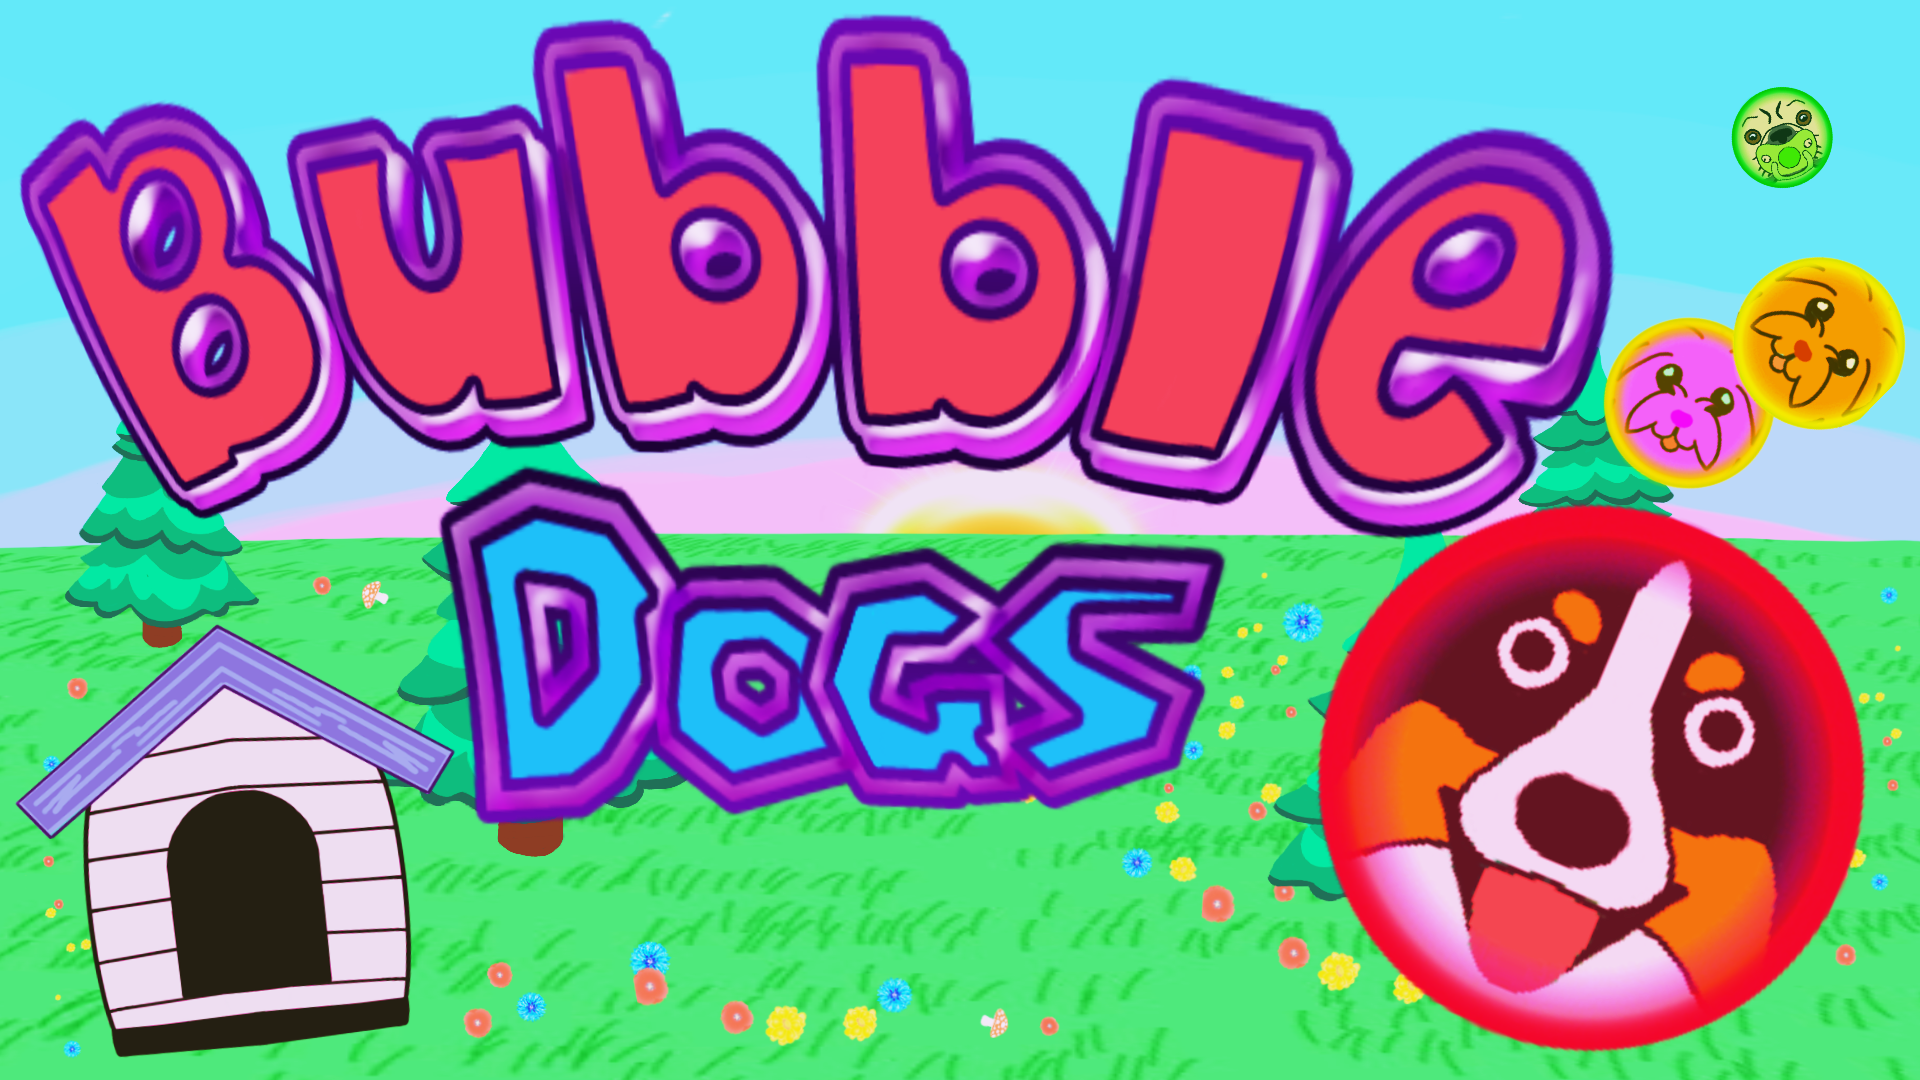 Bubble Dogs